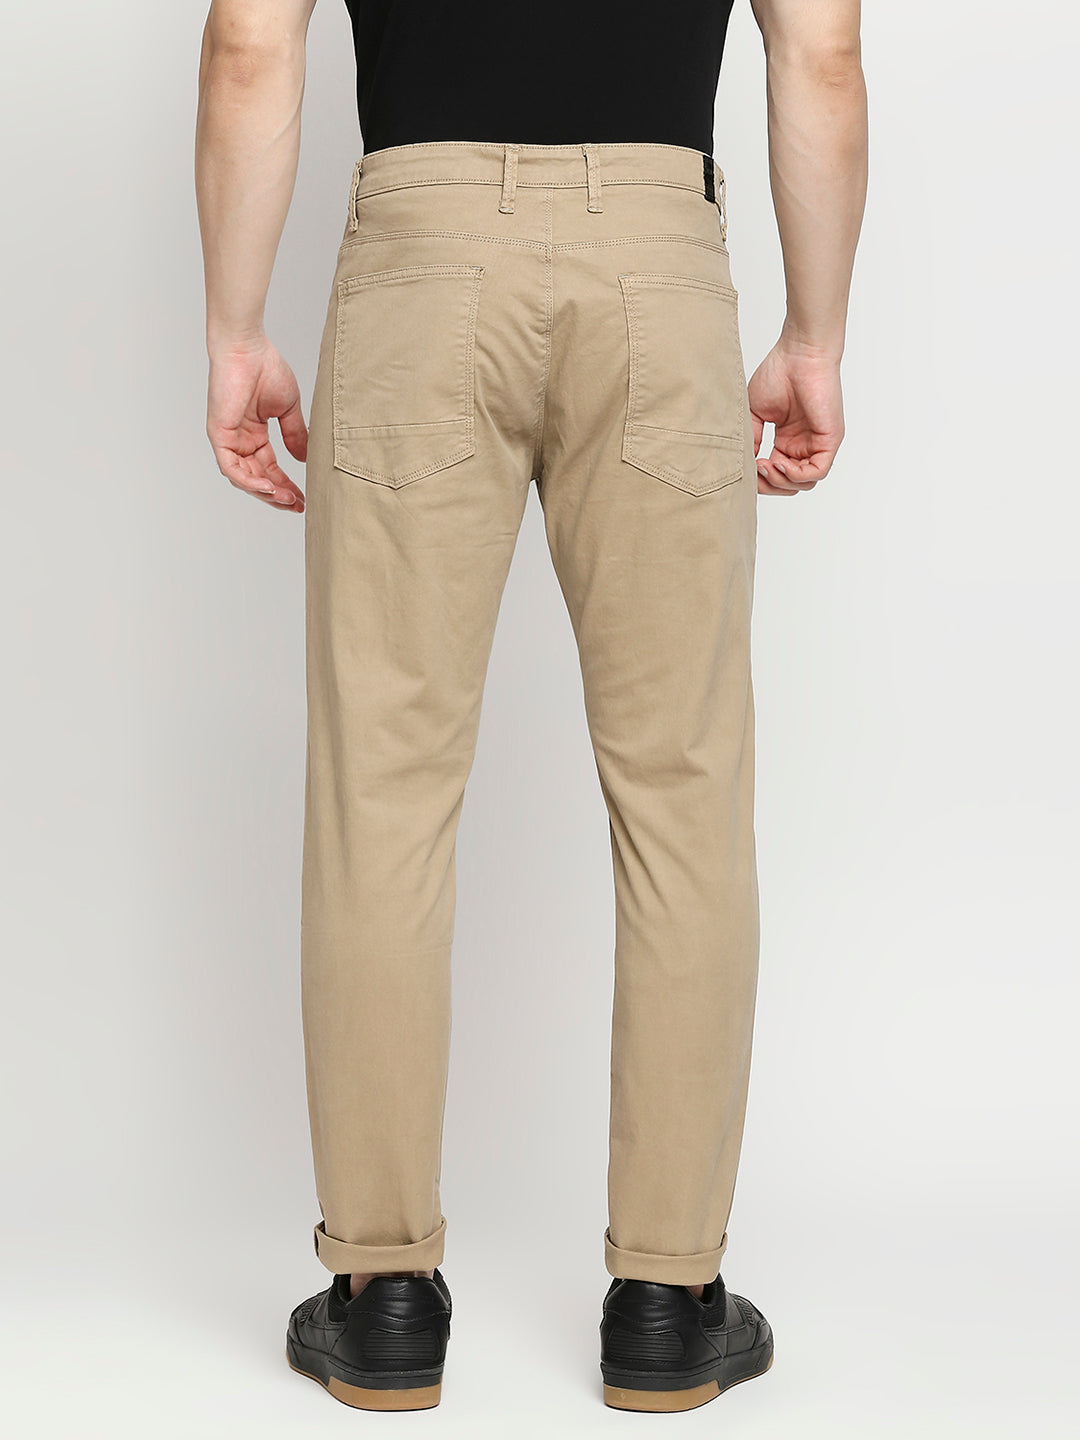 Spykar Camel Khaki Cotton Slim Fit Tapered Length Trousers For Men